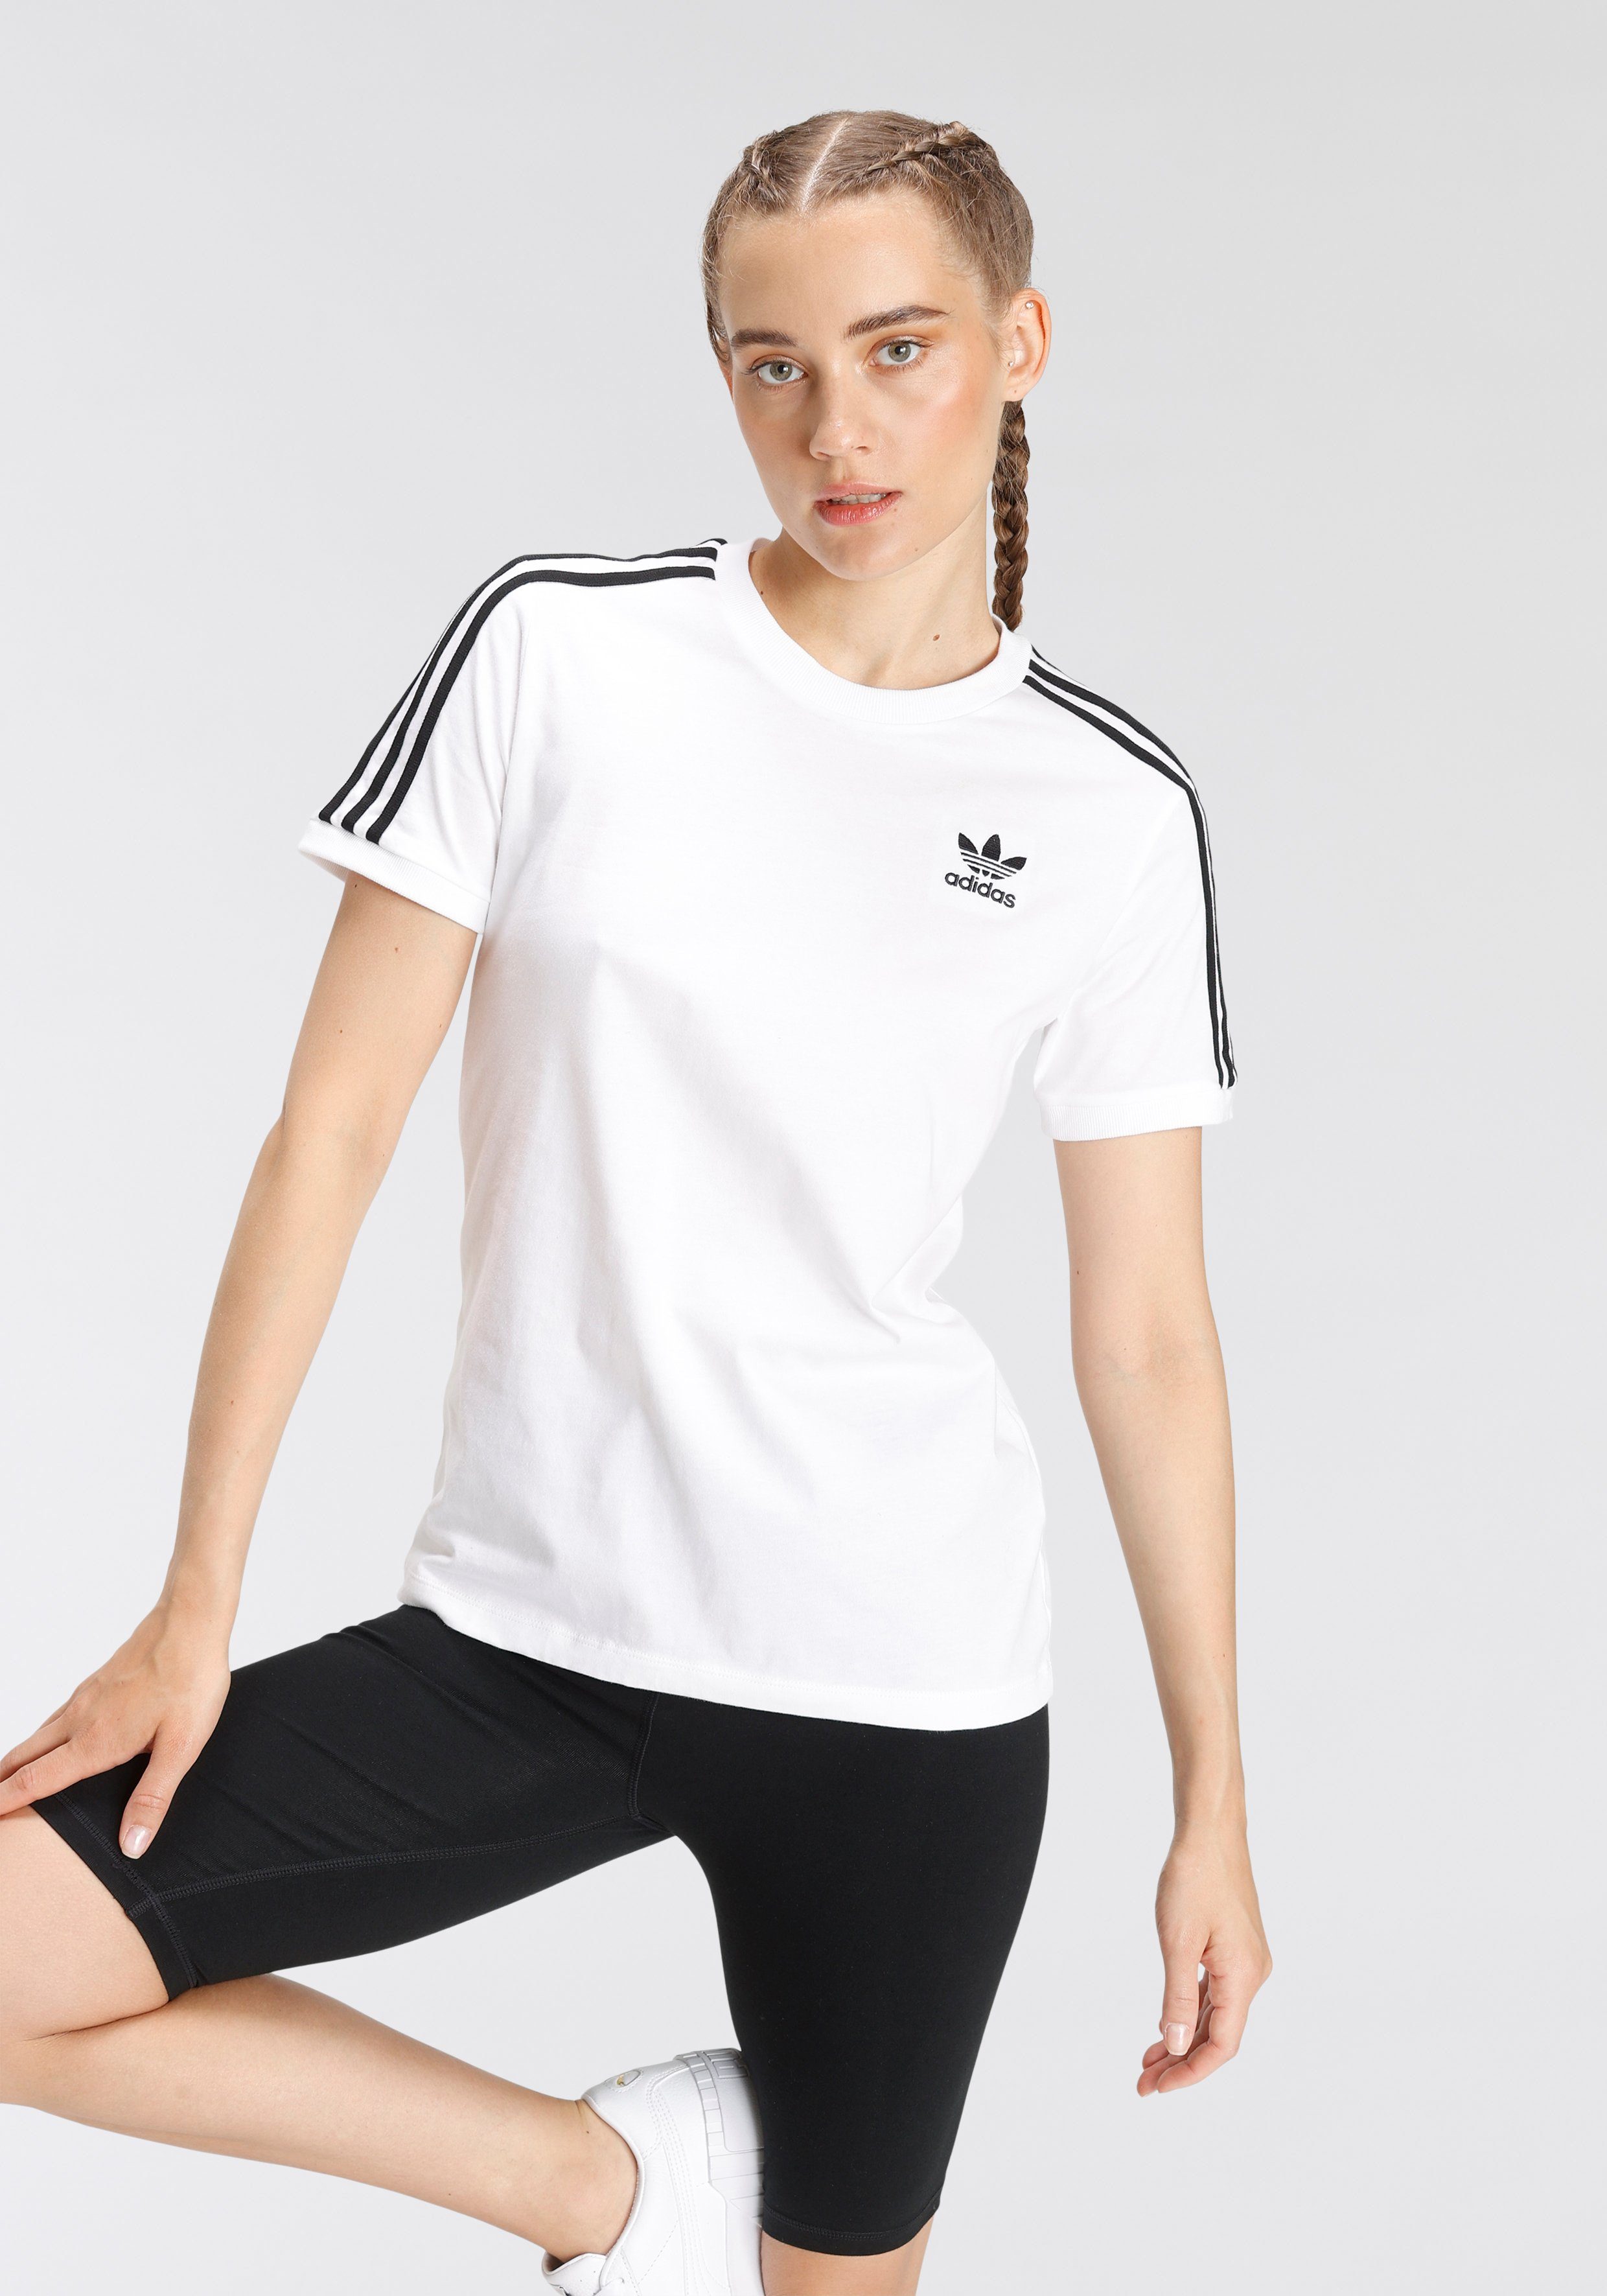 adidas Performance Casual Damen T-Shirts online kaufen | OTTO